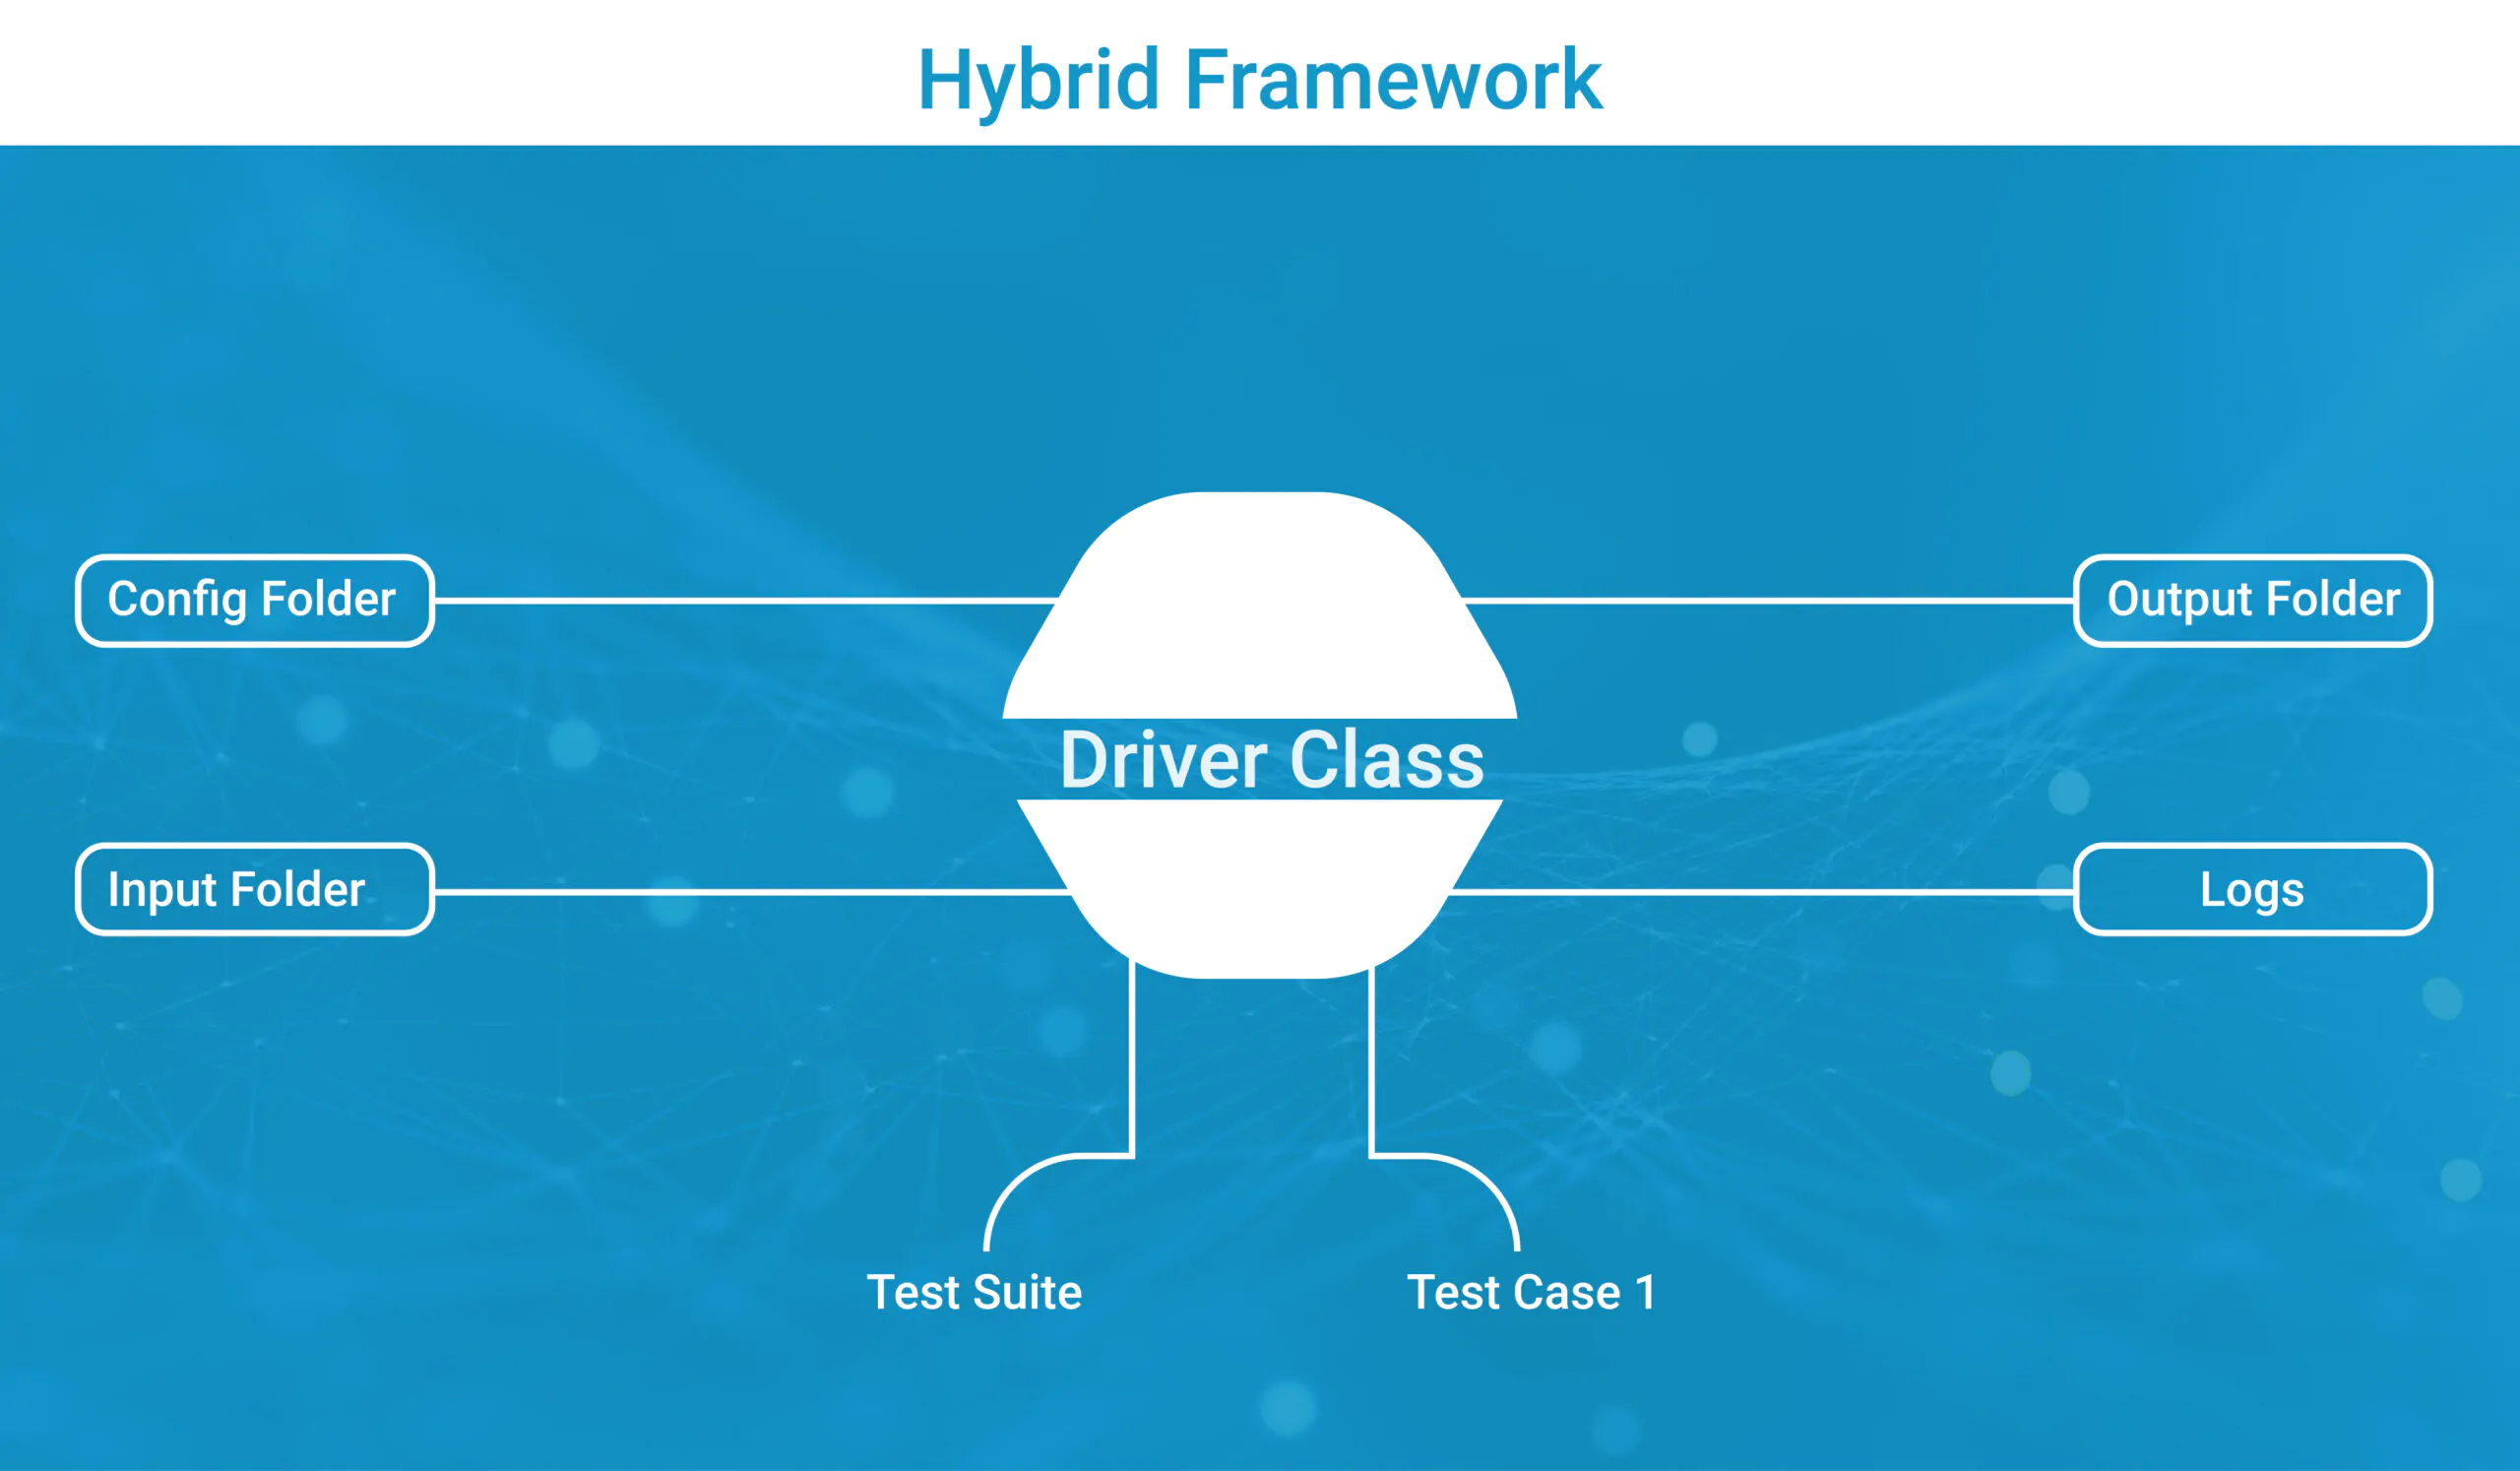 Hybrid Framework